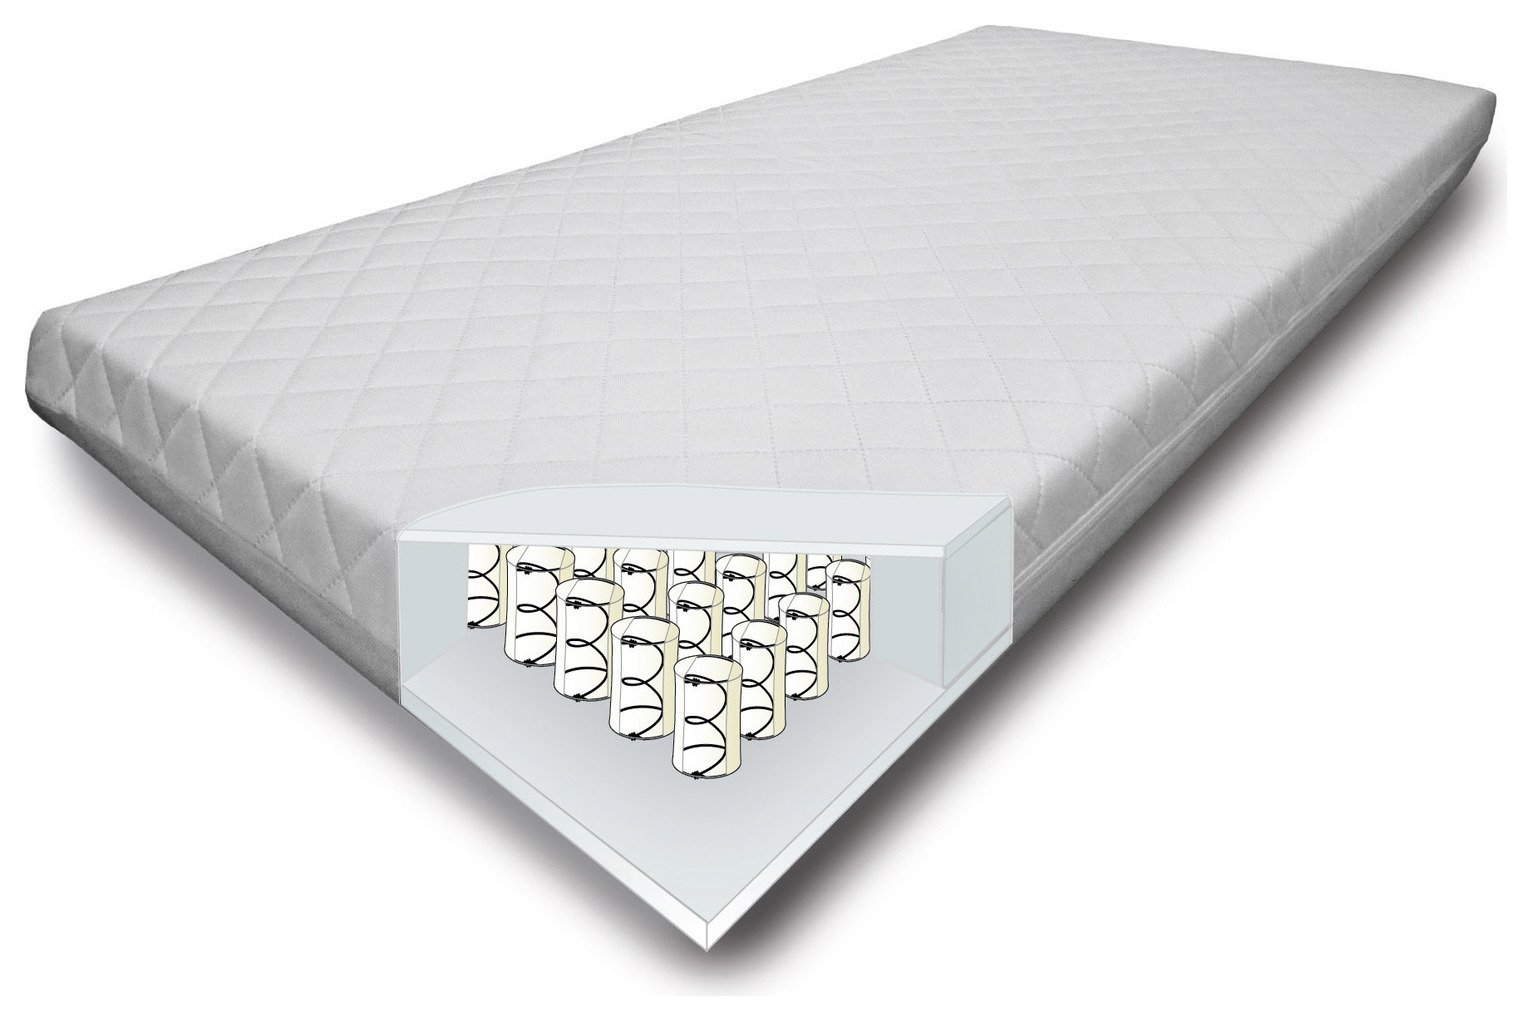 cuggl hypoallergenic foam cot bed mattress